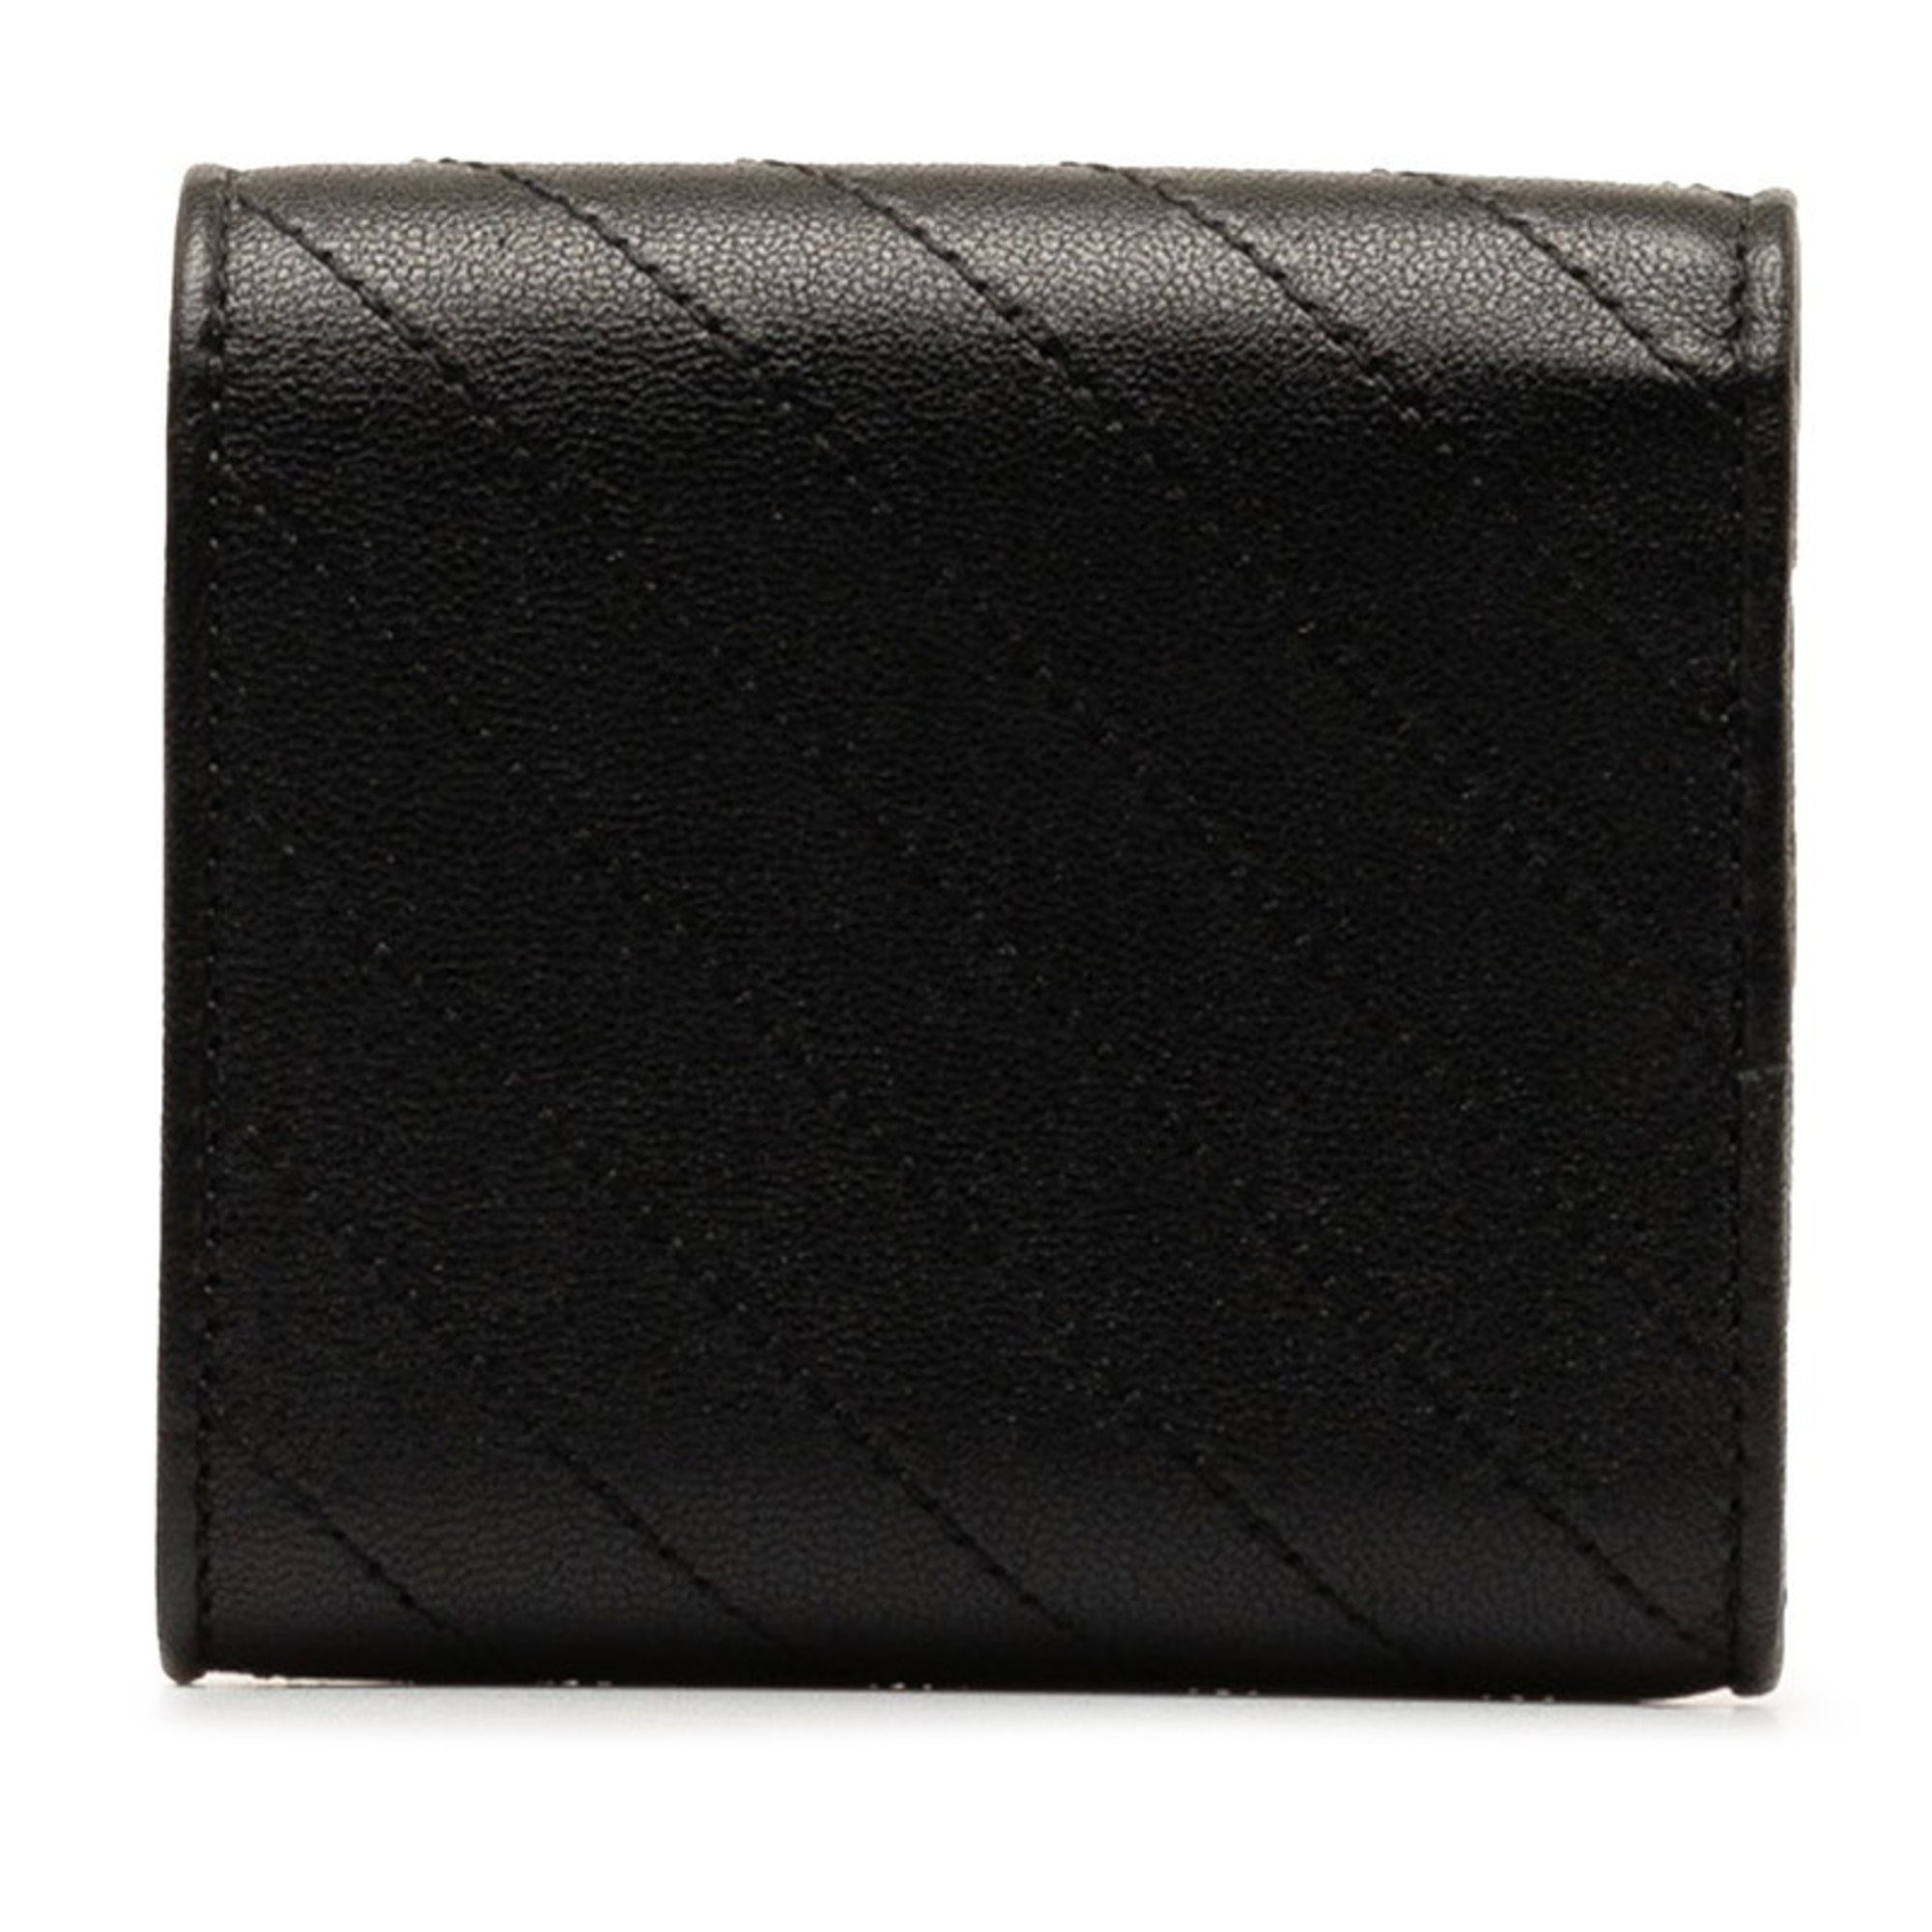 Gucci Blondie Interlocking G Bi-fold Wallet 760316 AACP7 Black Leather Women's GUCCI